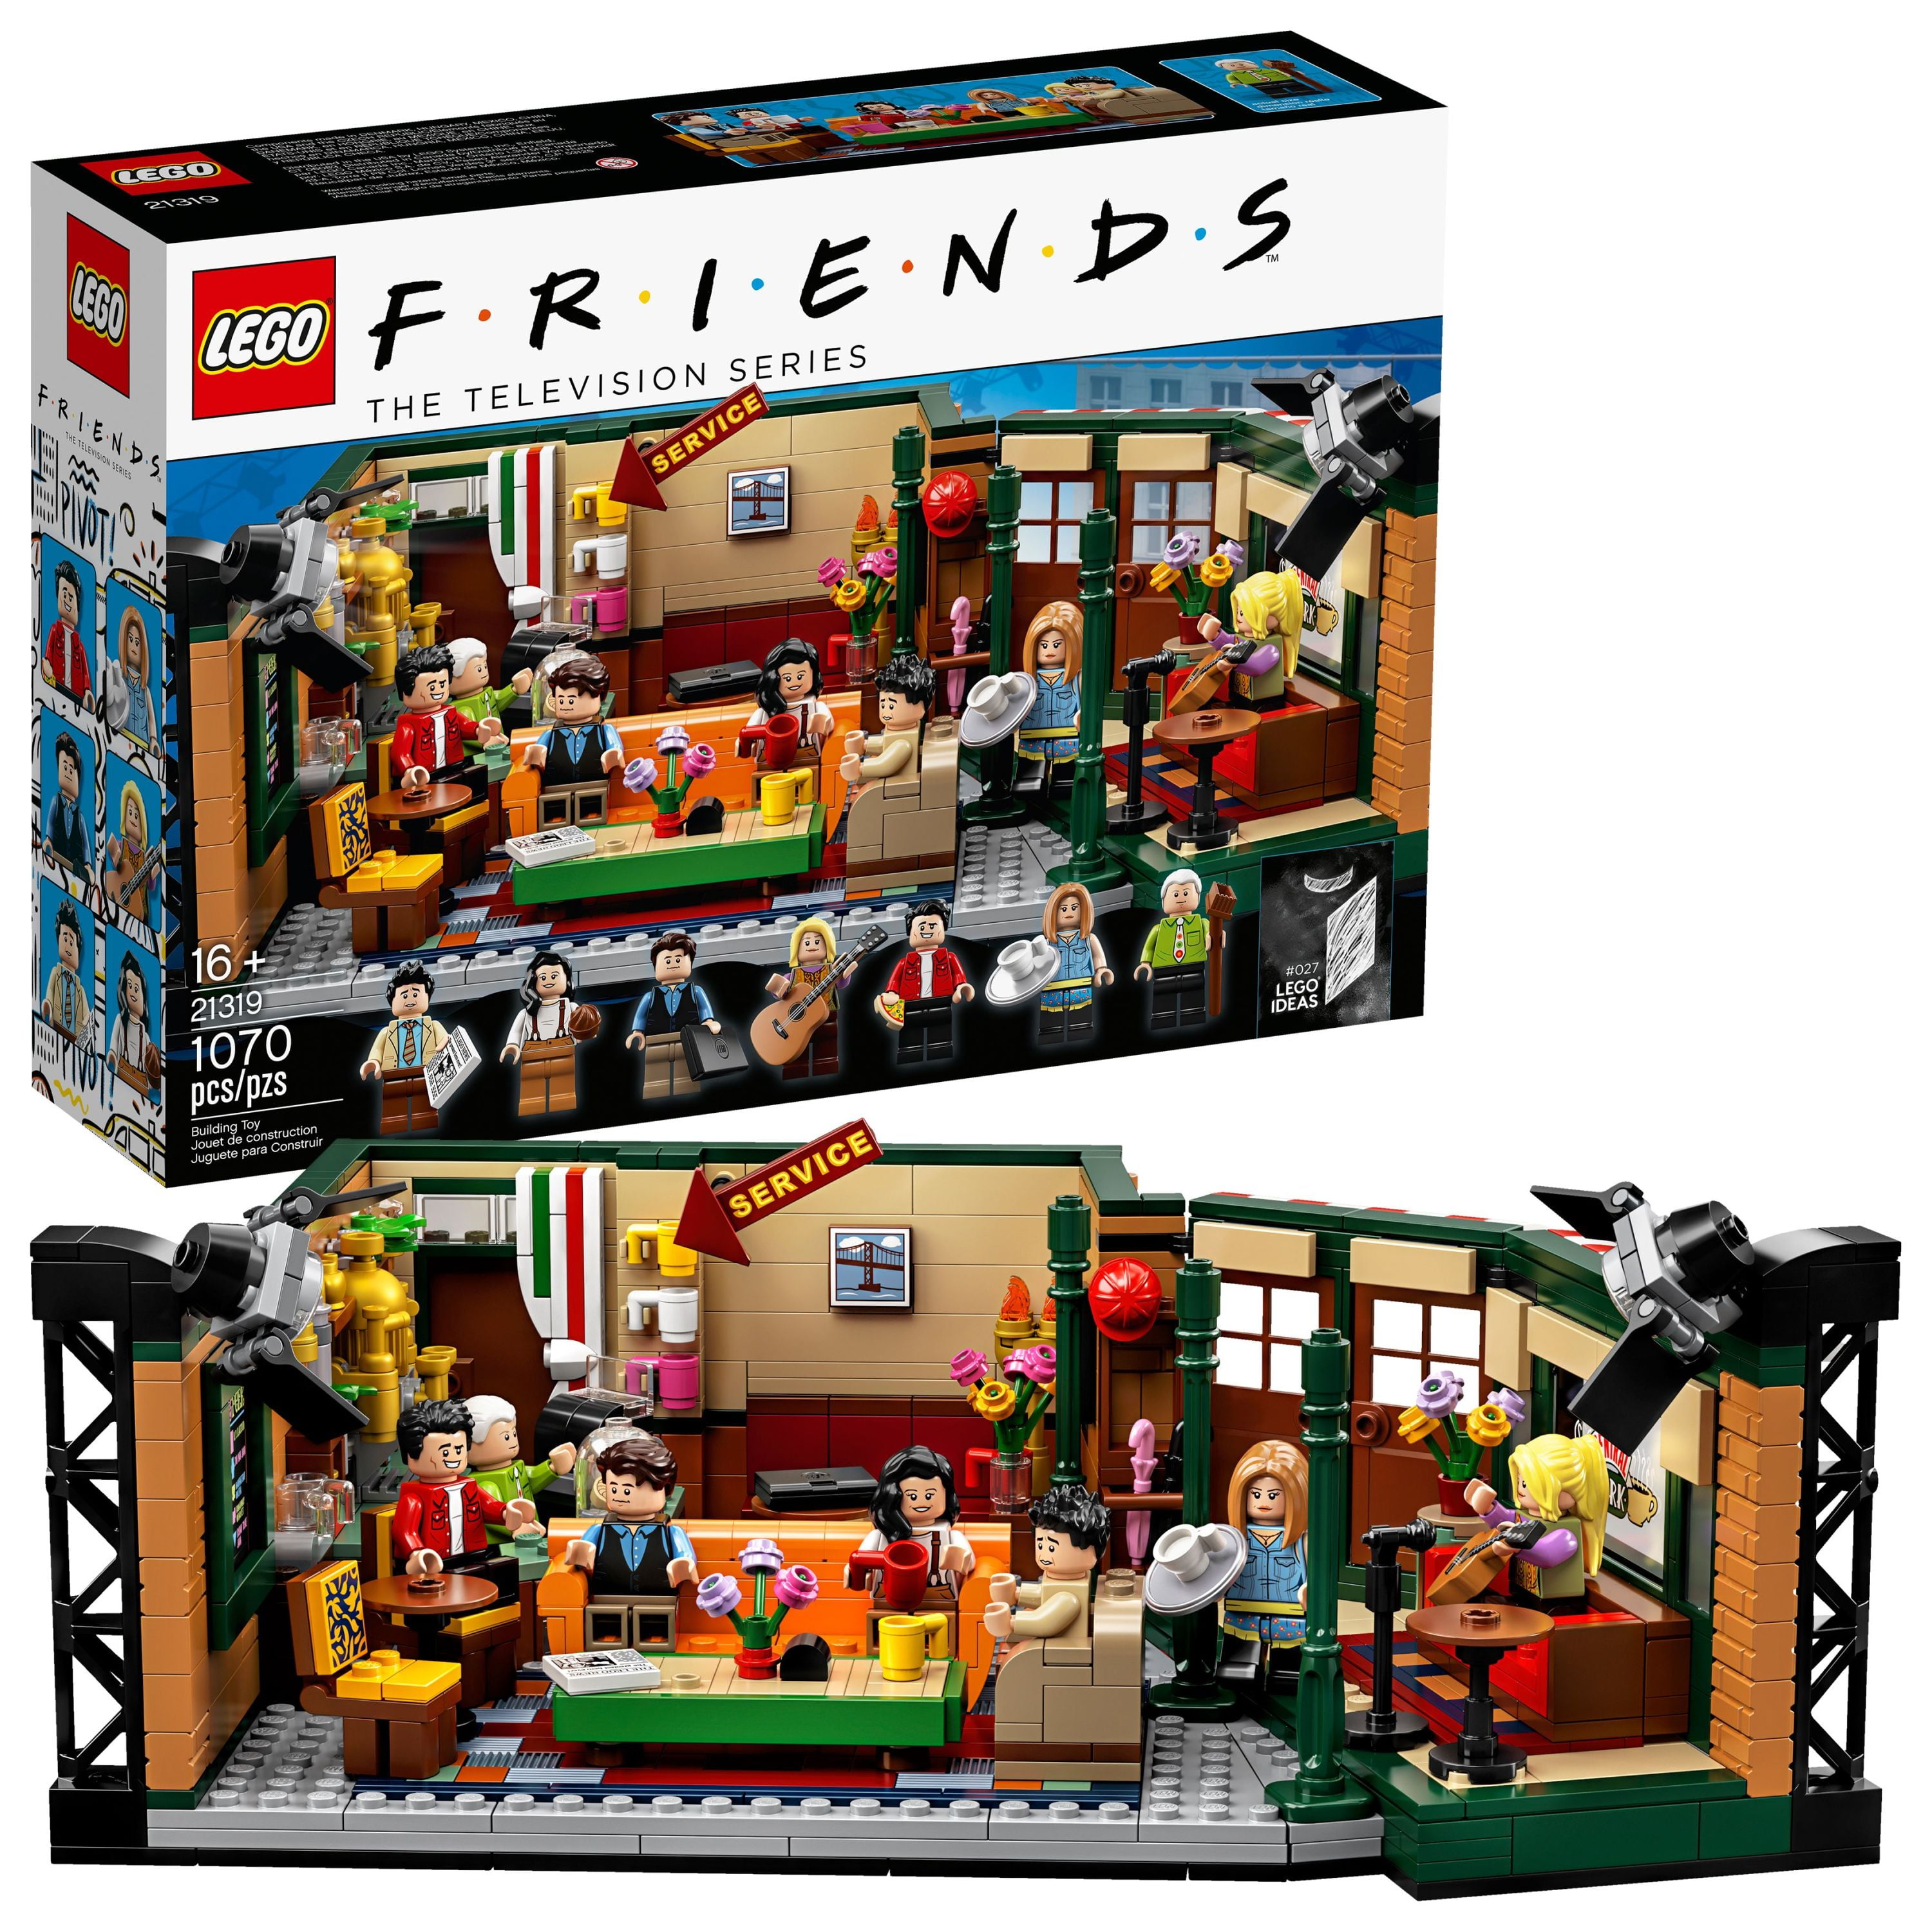 LEGO Mini Figure Chandler Bing from set 21319 F.R.I.E.N.D.S Central Perk 